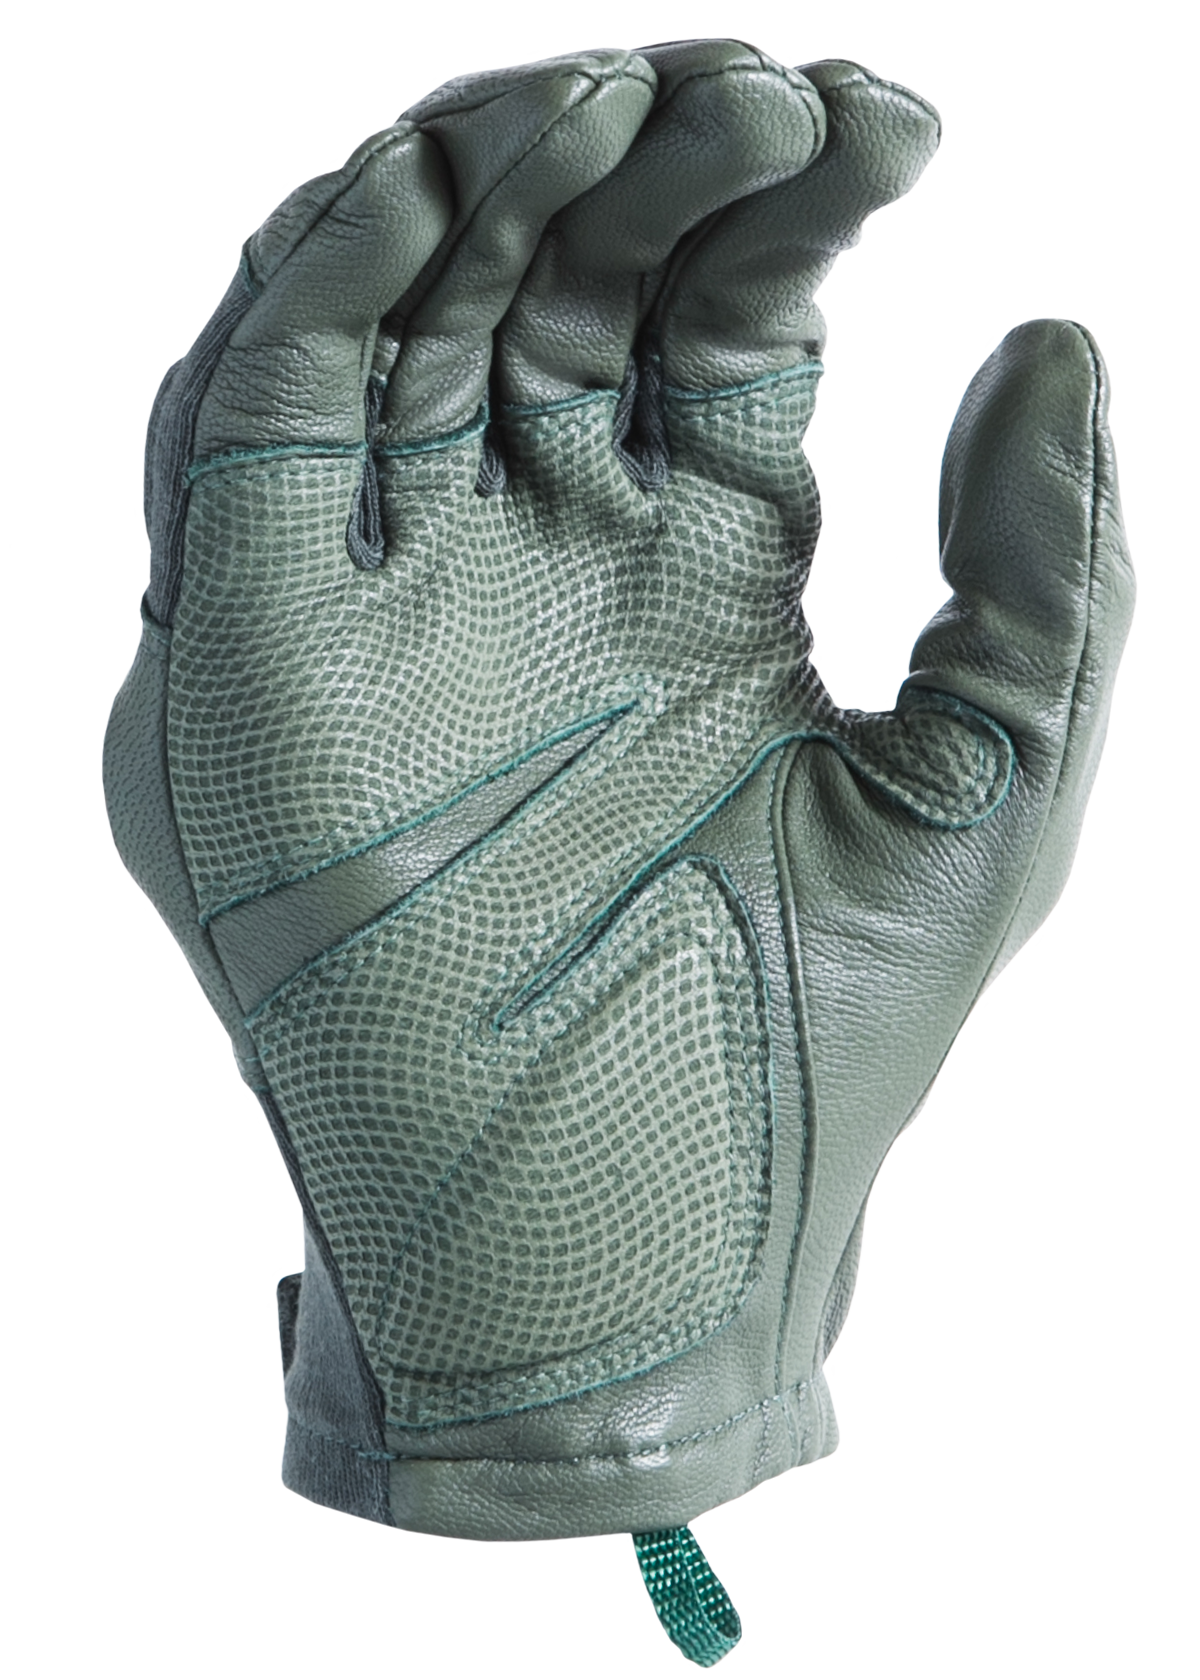 Hosa Technology A/V Work Gloves (Medium) HGG-100-M B&H Photo